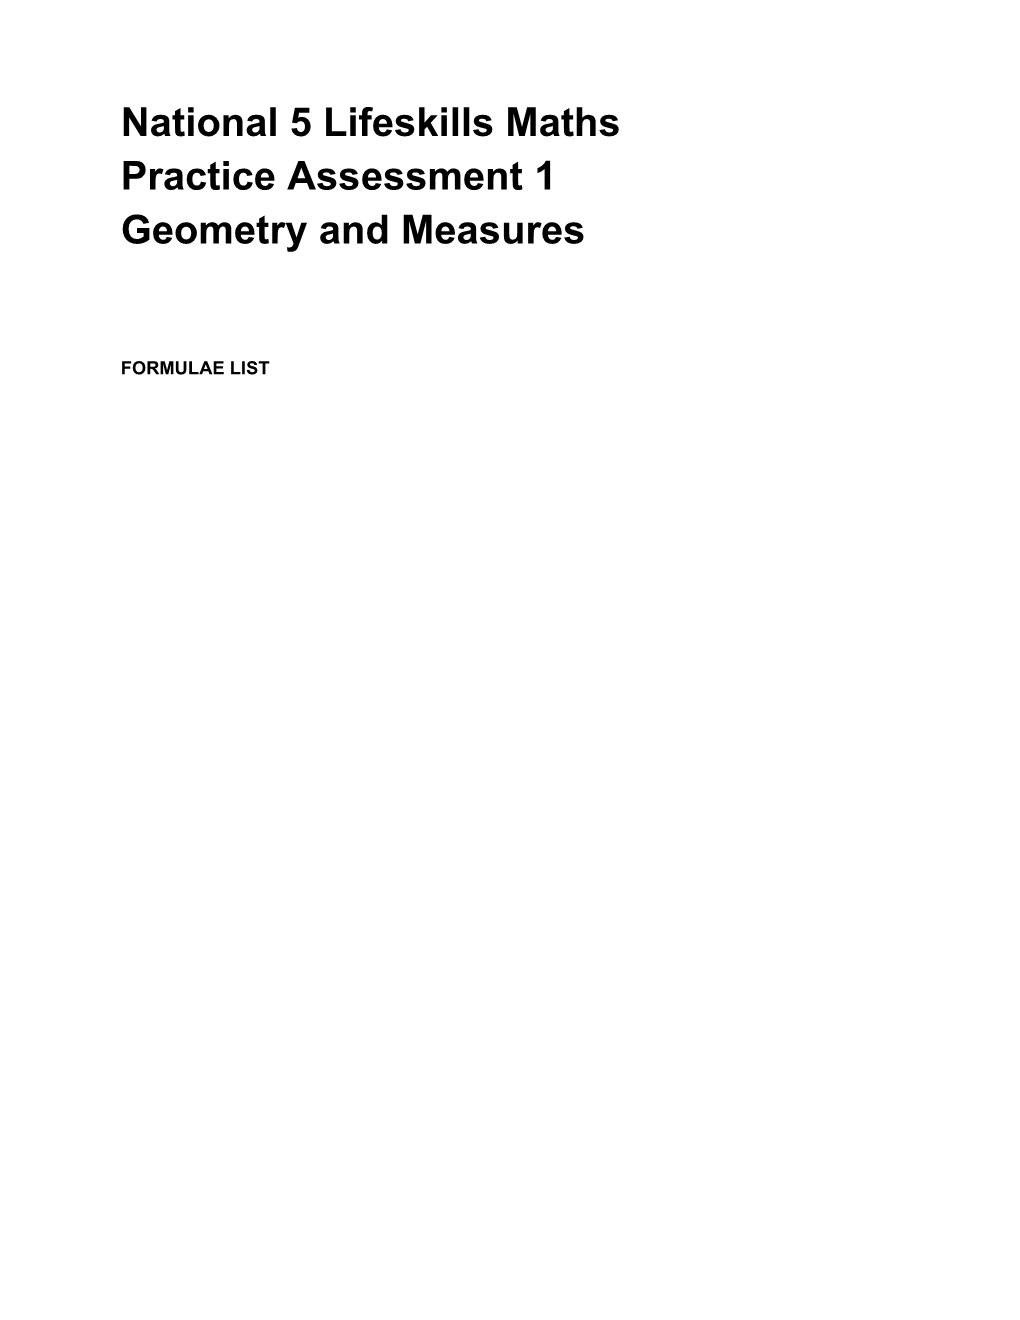 National 5Lifeskillsmaths Practice Assessment1 Geometryand Measures